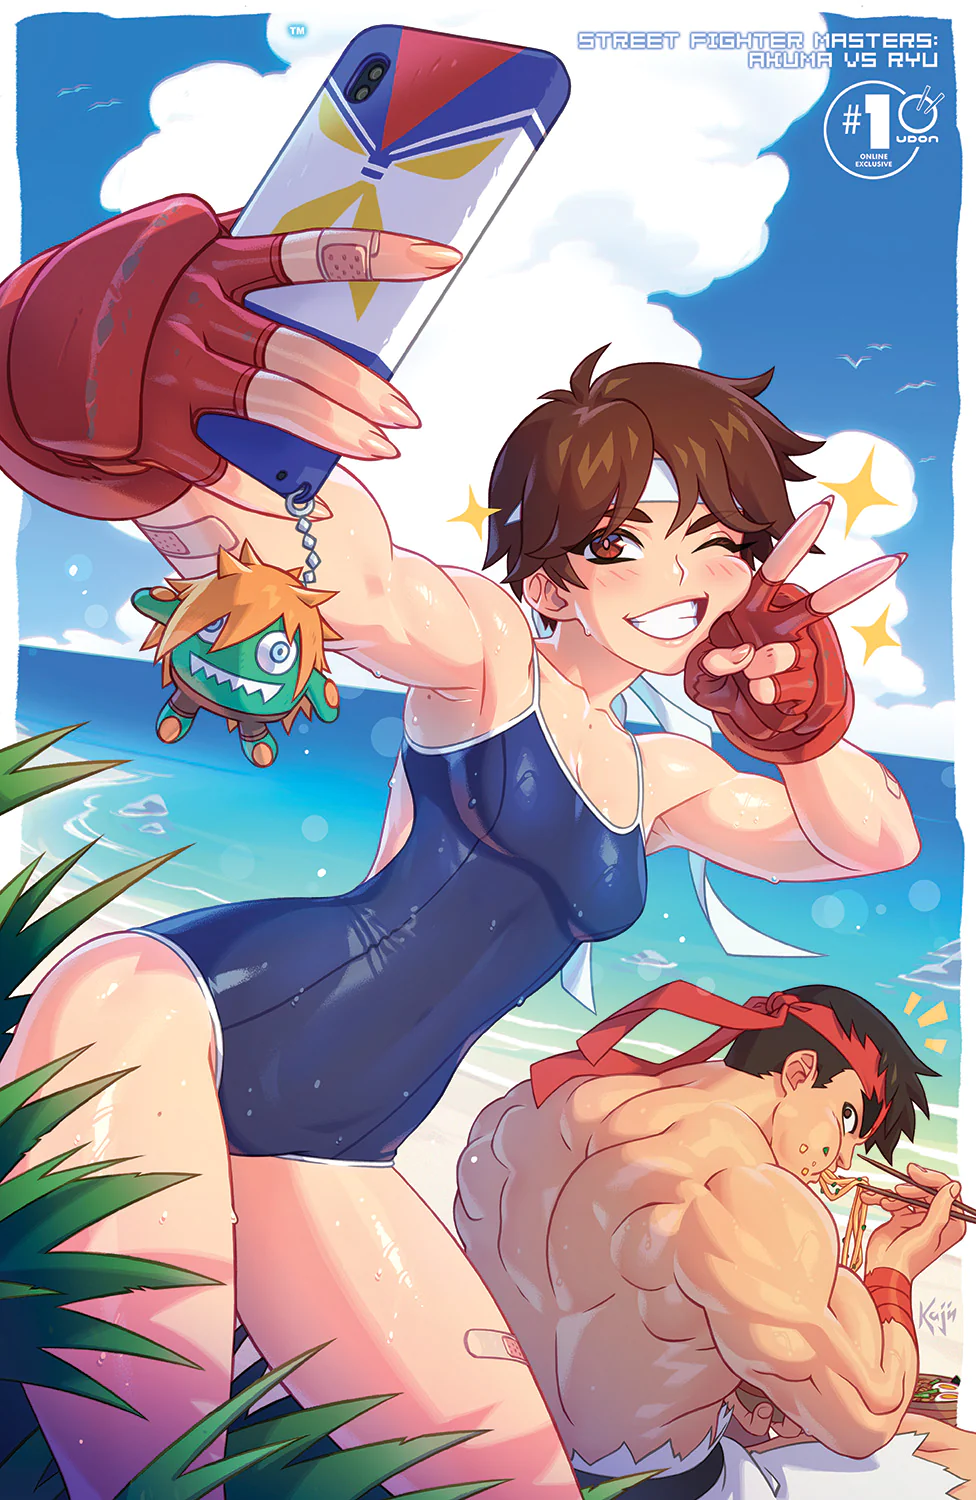 Street Fighter Masters: Akuma vs. Ryu #1 Comic Covers Revealed